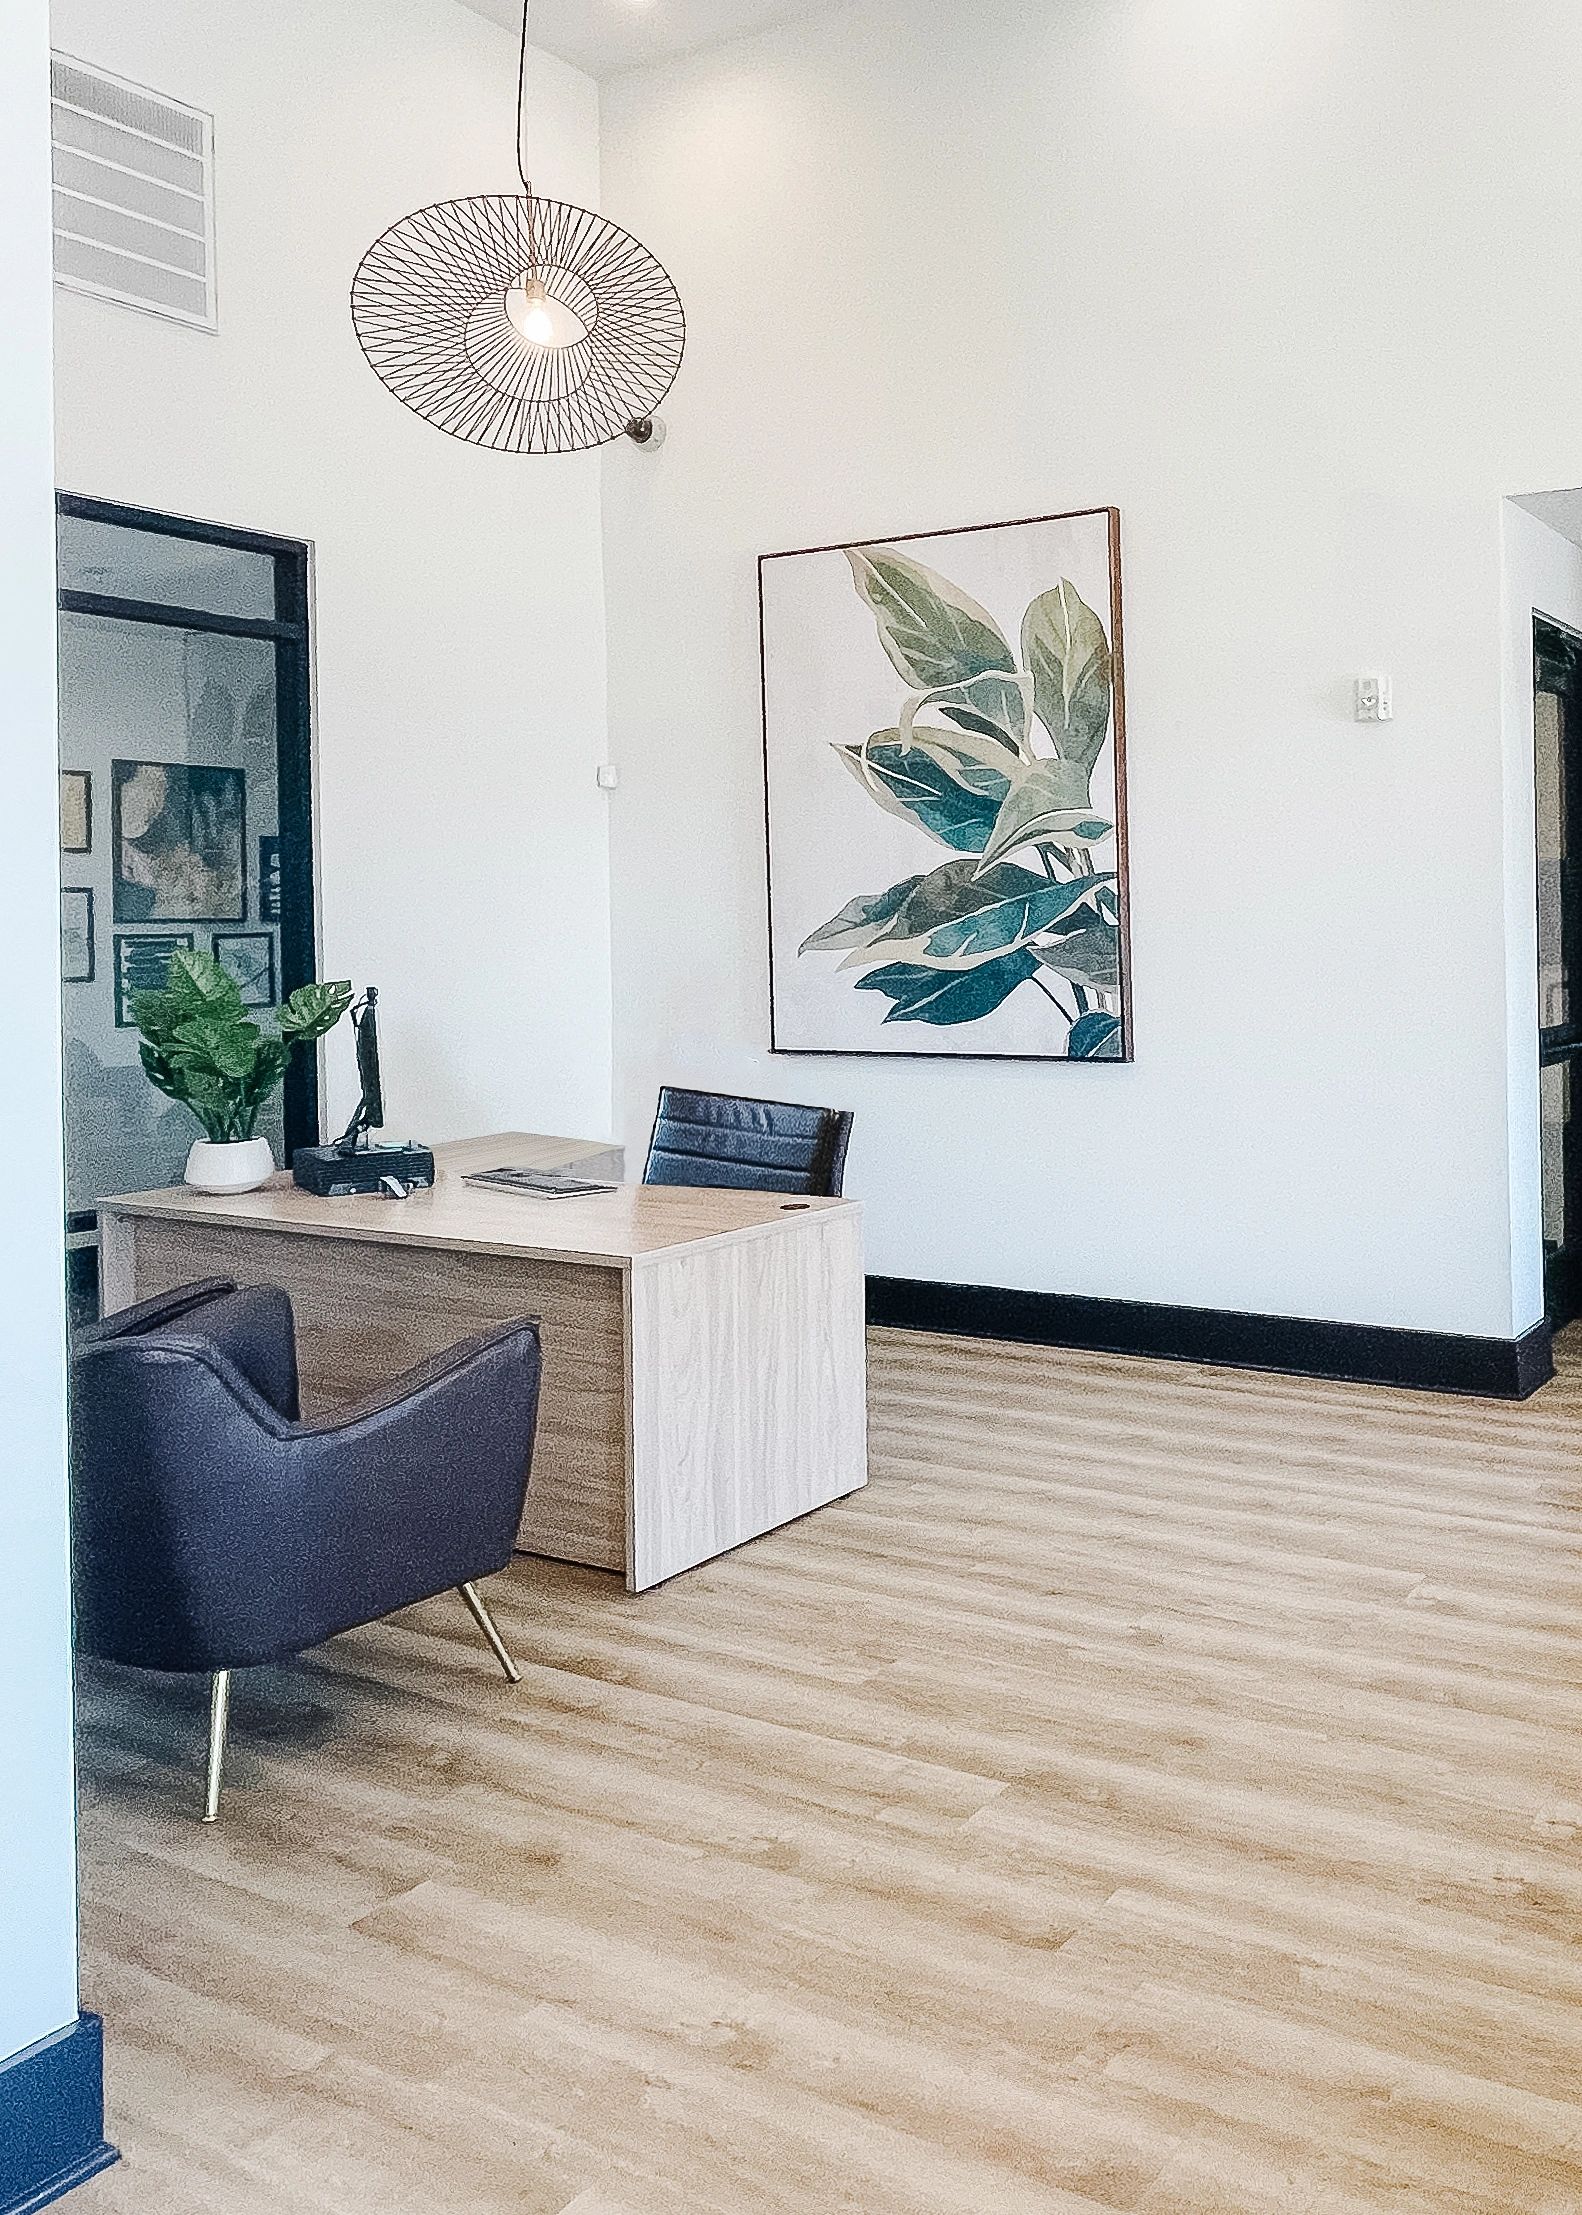 Leasing office interior design project by atlanta designer design by dubois